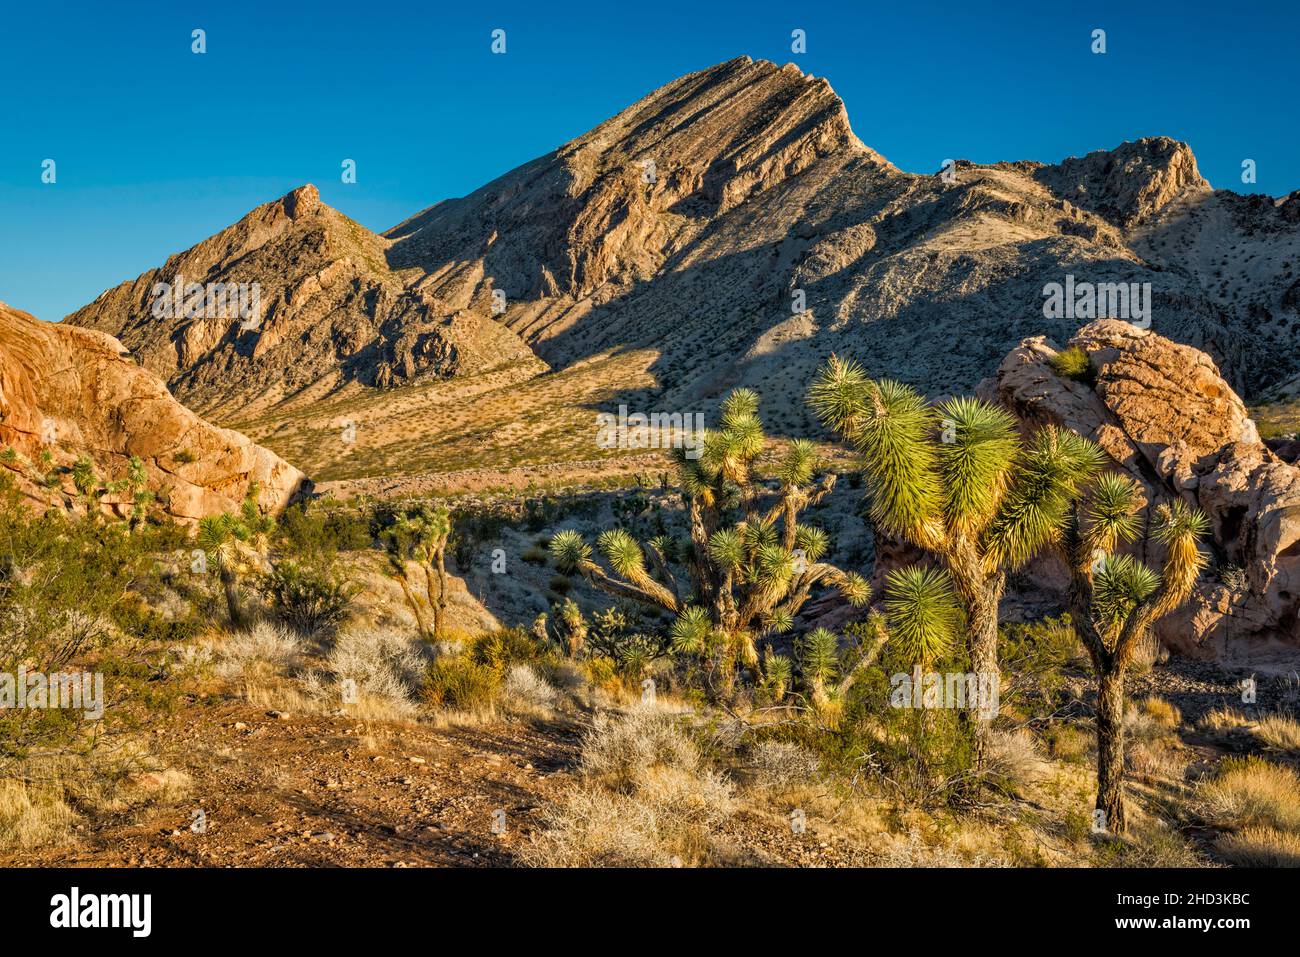 Joshua Trees, Jurassic Sandstone Rocks, Palaeozoic marine Limestone Massiv, Sunrise, Whitney Pocket Area, Gold Butte National Monument, Nevada, USA Stockfoto